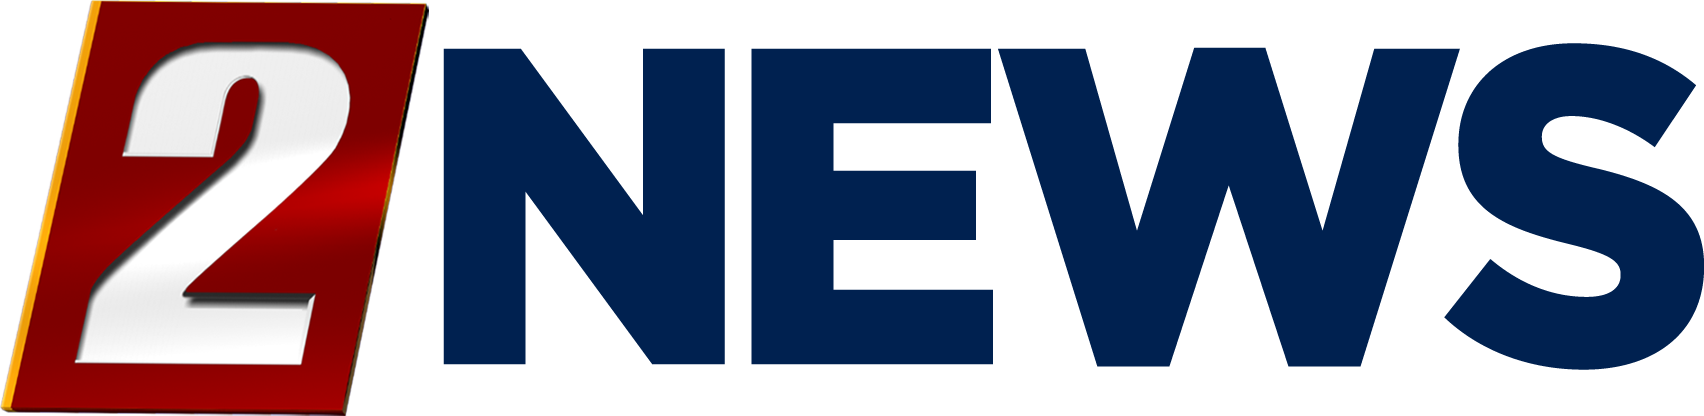 2 News Logo